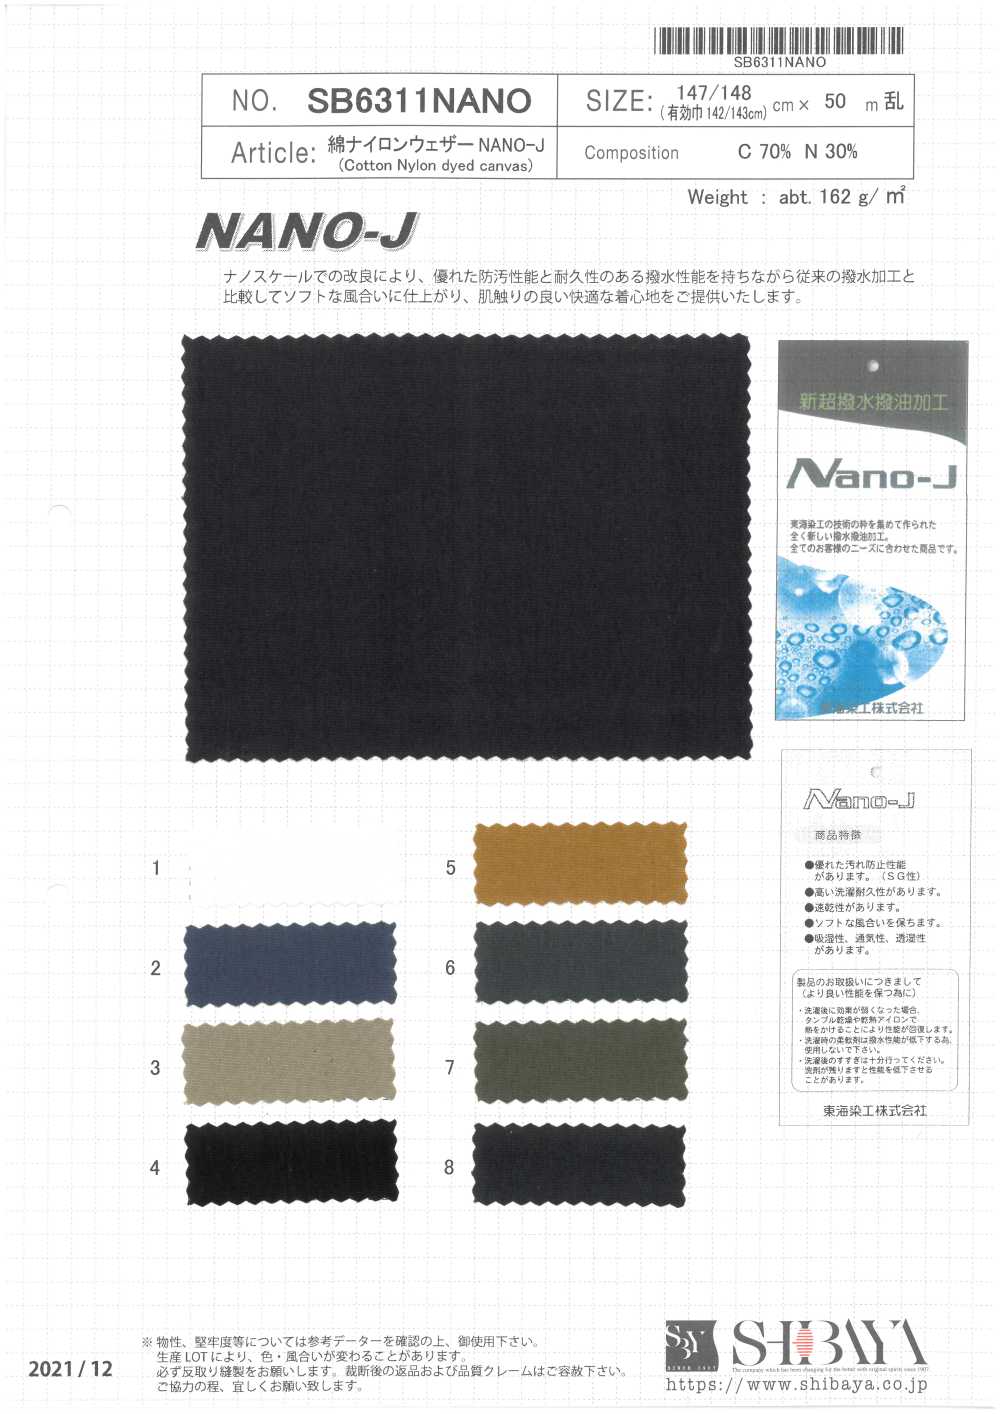 SB6311NANO Baumwoll-Nylon-Wettertuch NANO-J[Textilgewebe] SHIBAYA